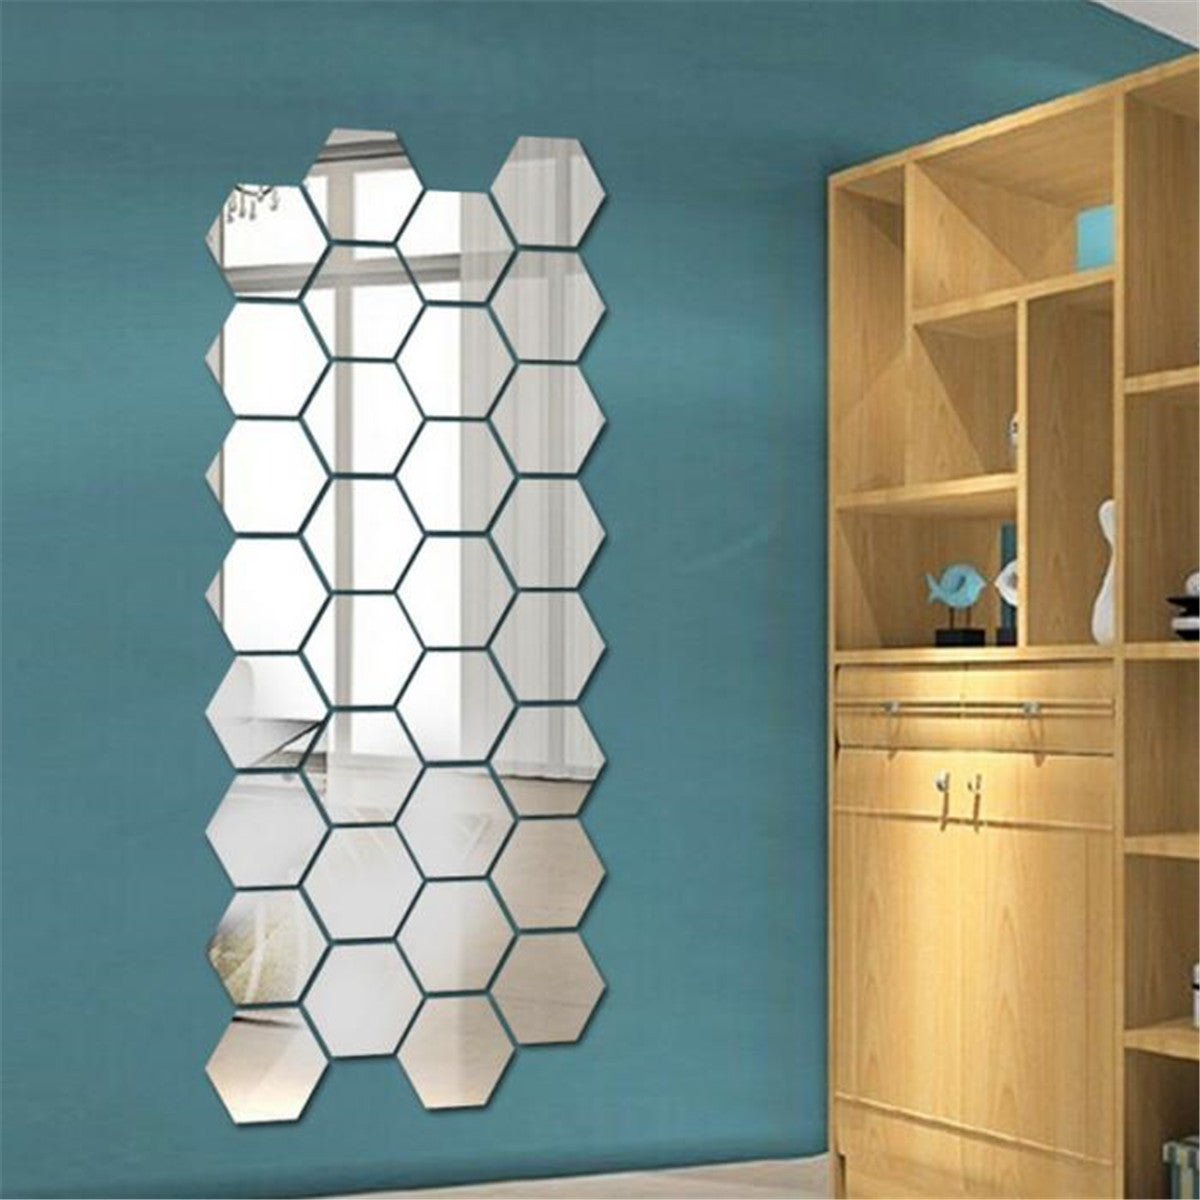 3D Wall Mirror Stickers Home Decor Hexagonal